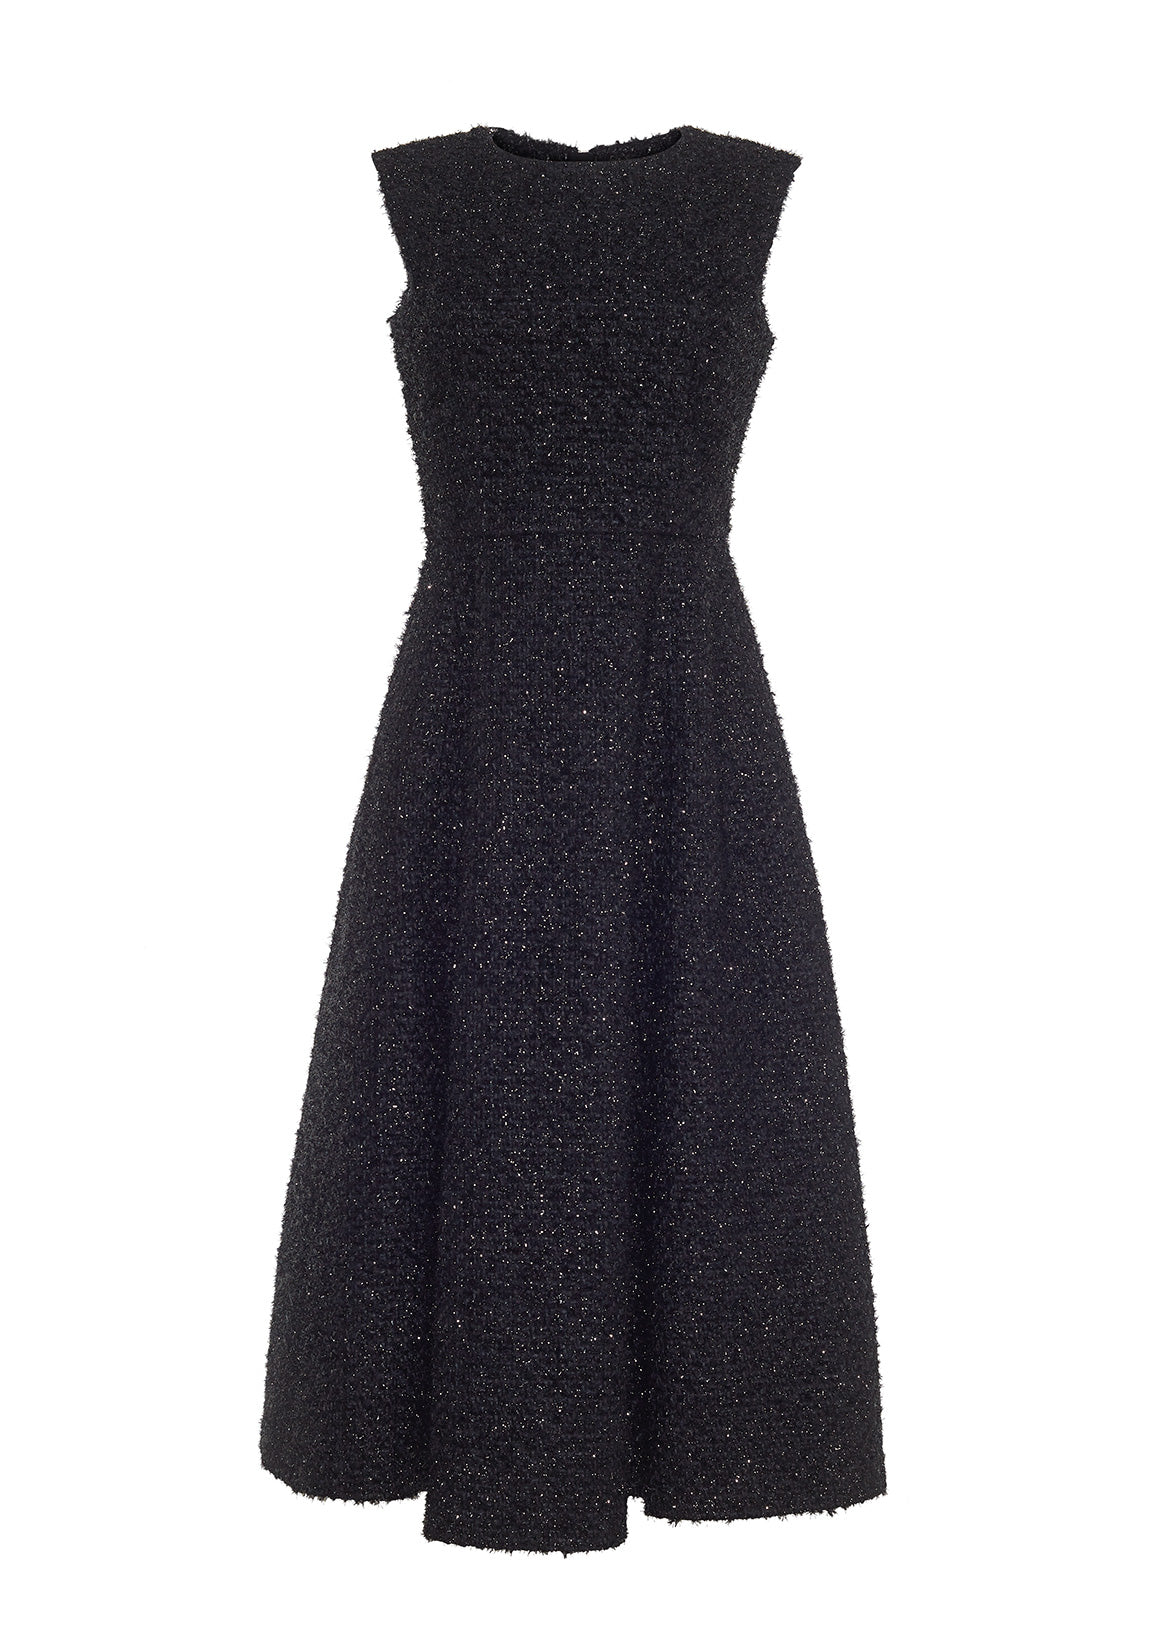 Tweed mid-length dress